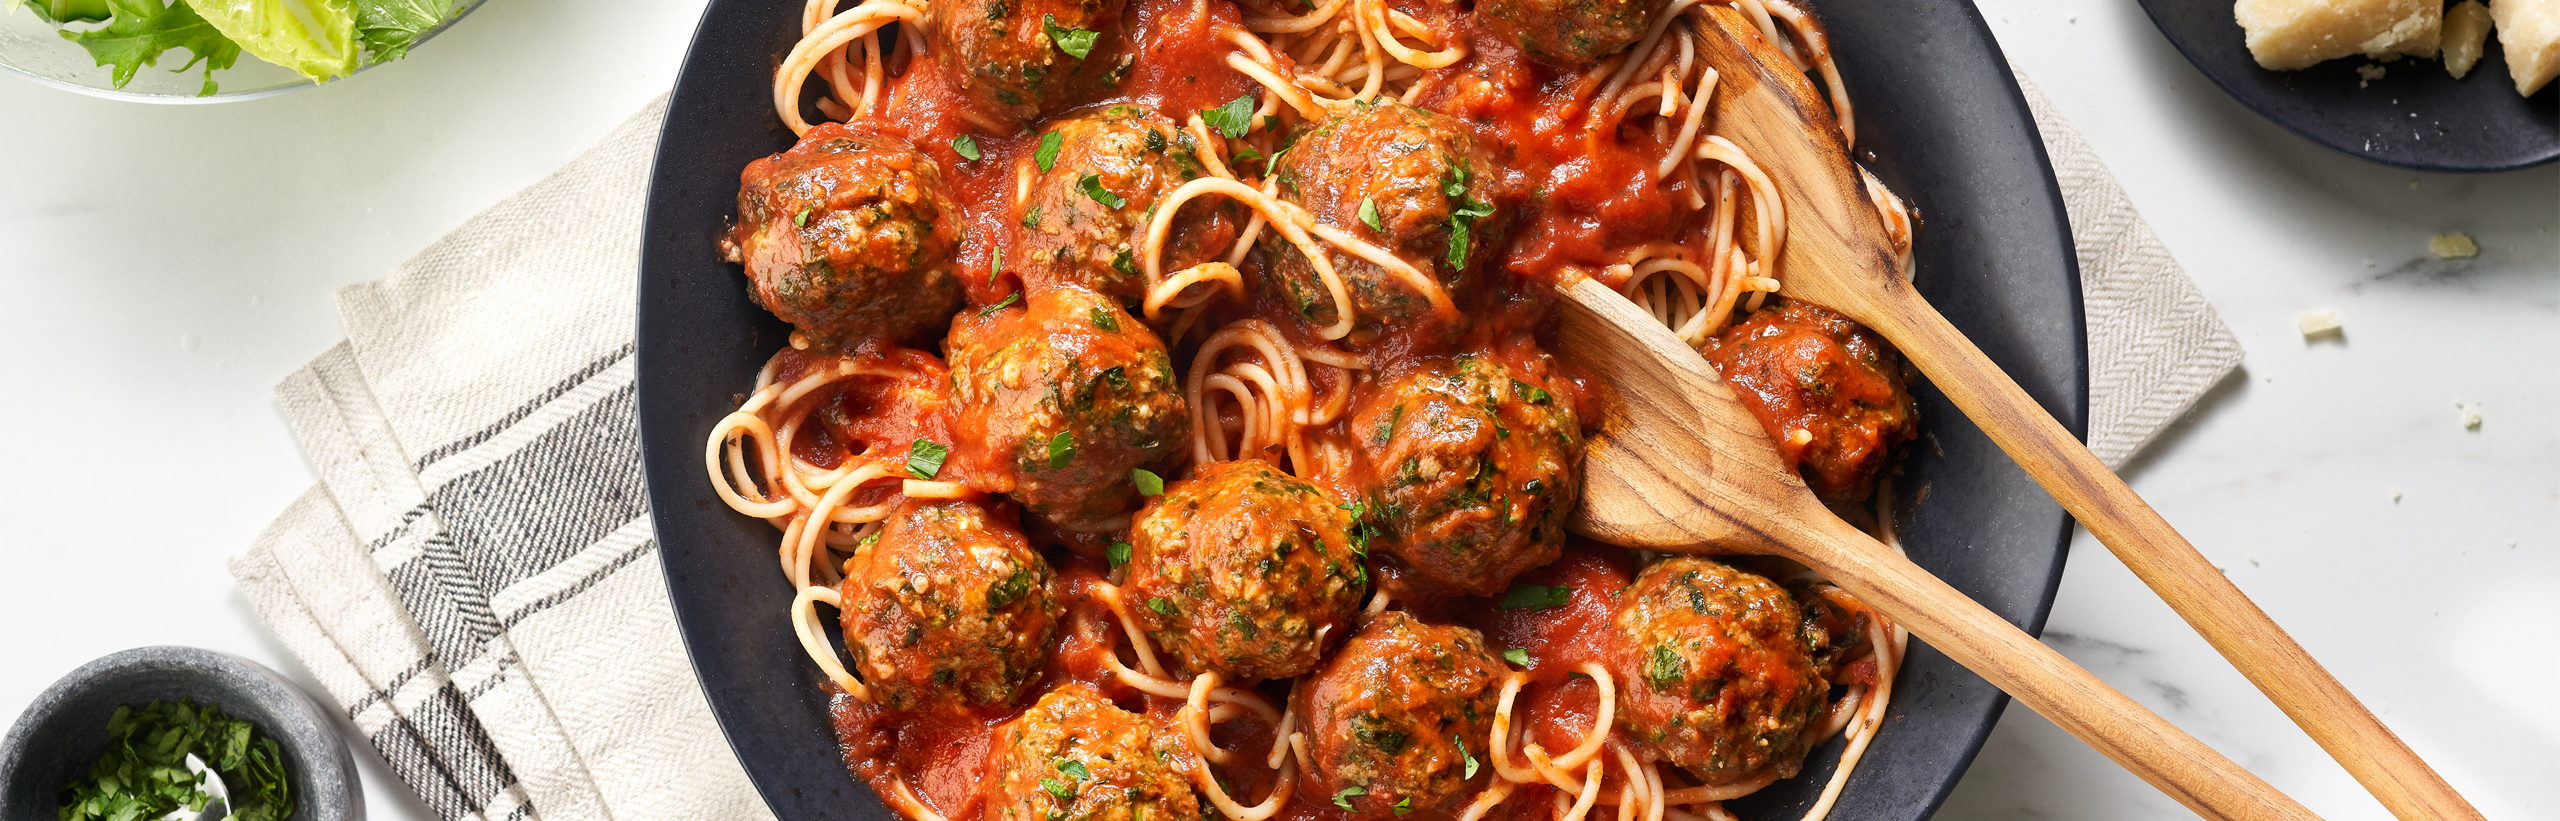 Low FODMAP Gluten Free Spaghetti & Meatballs